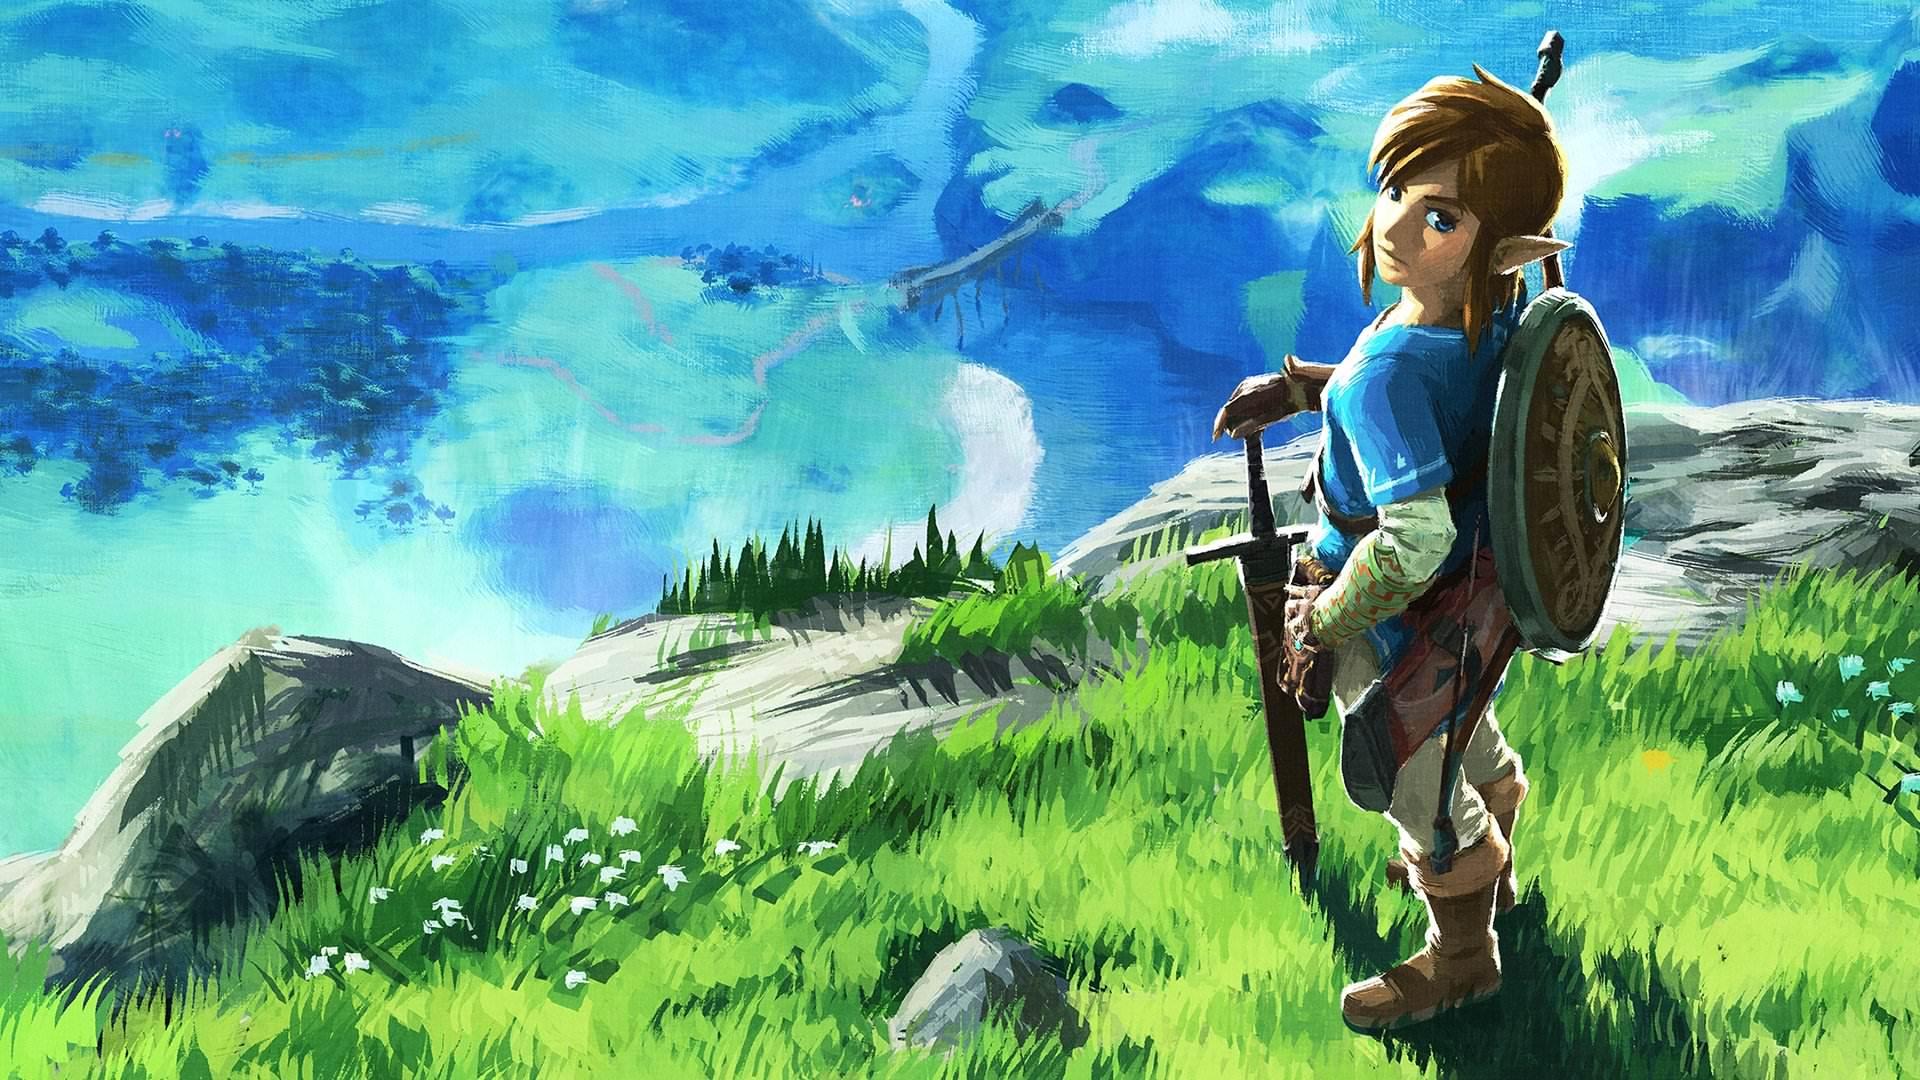 The Legend Of Zelda: Breath Of The Wild wallpapers 1920x1080 Full HD